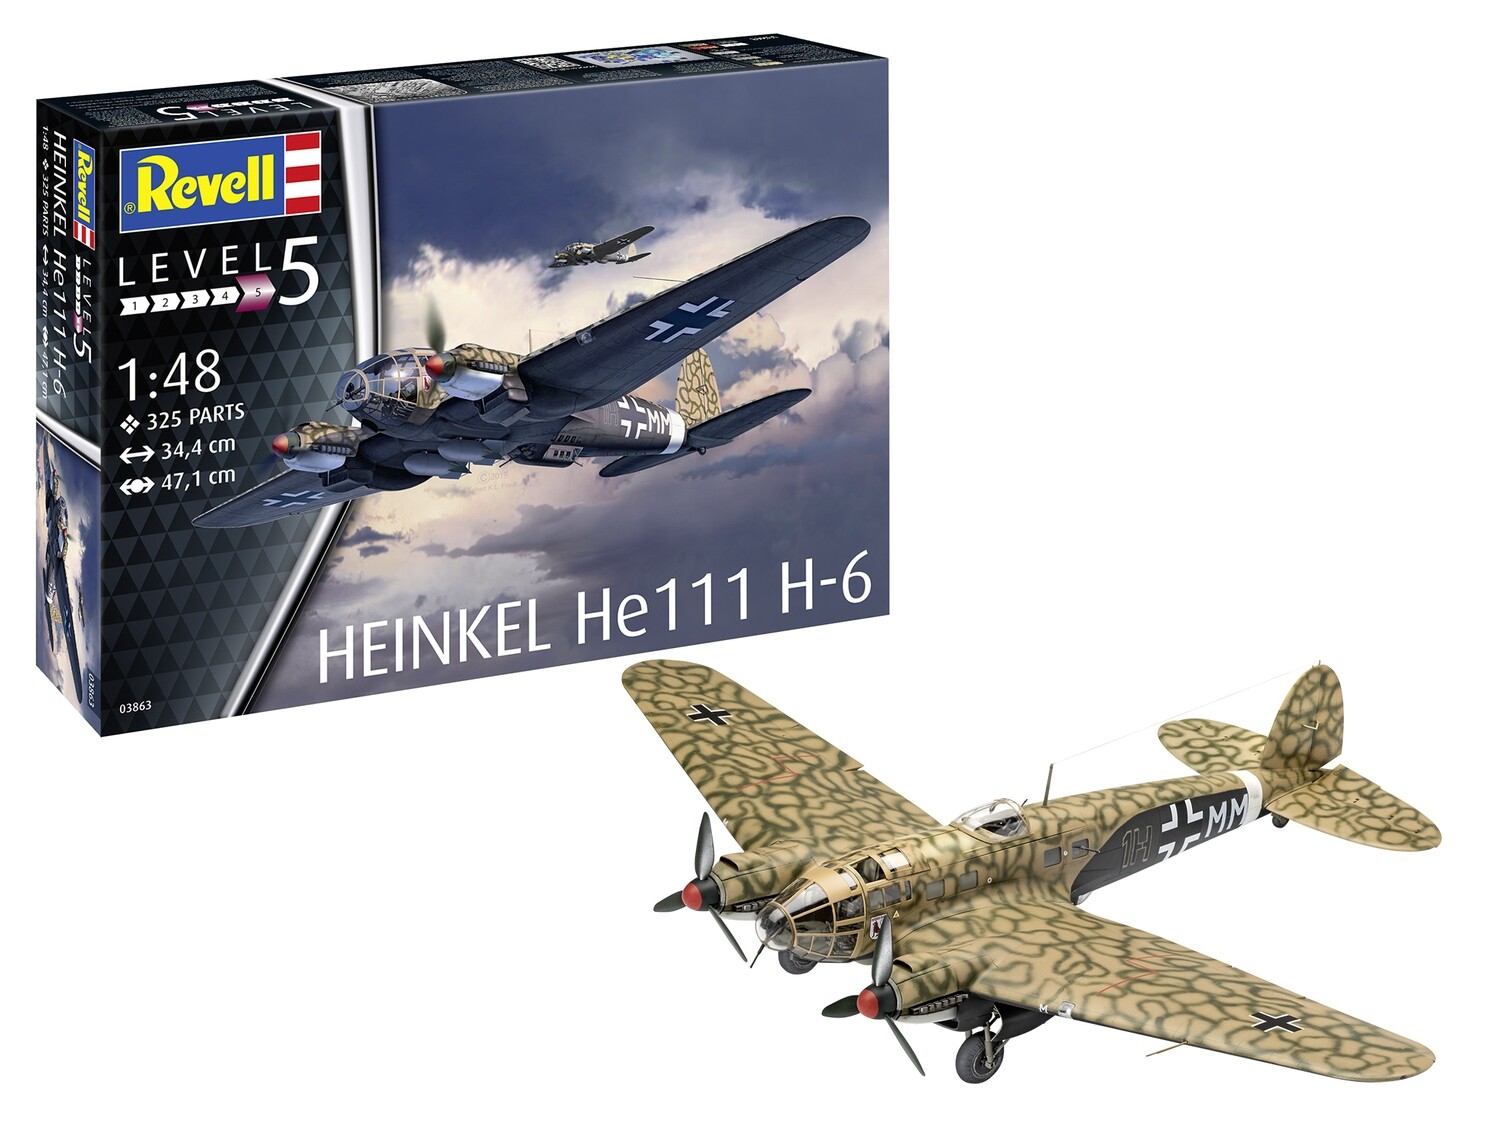 Blechschild 20x30 cm Heinkel He111 H-6 Flugzeug